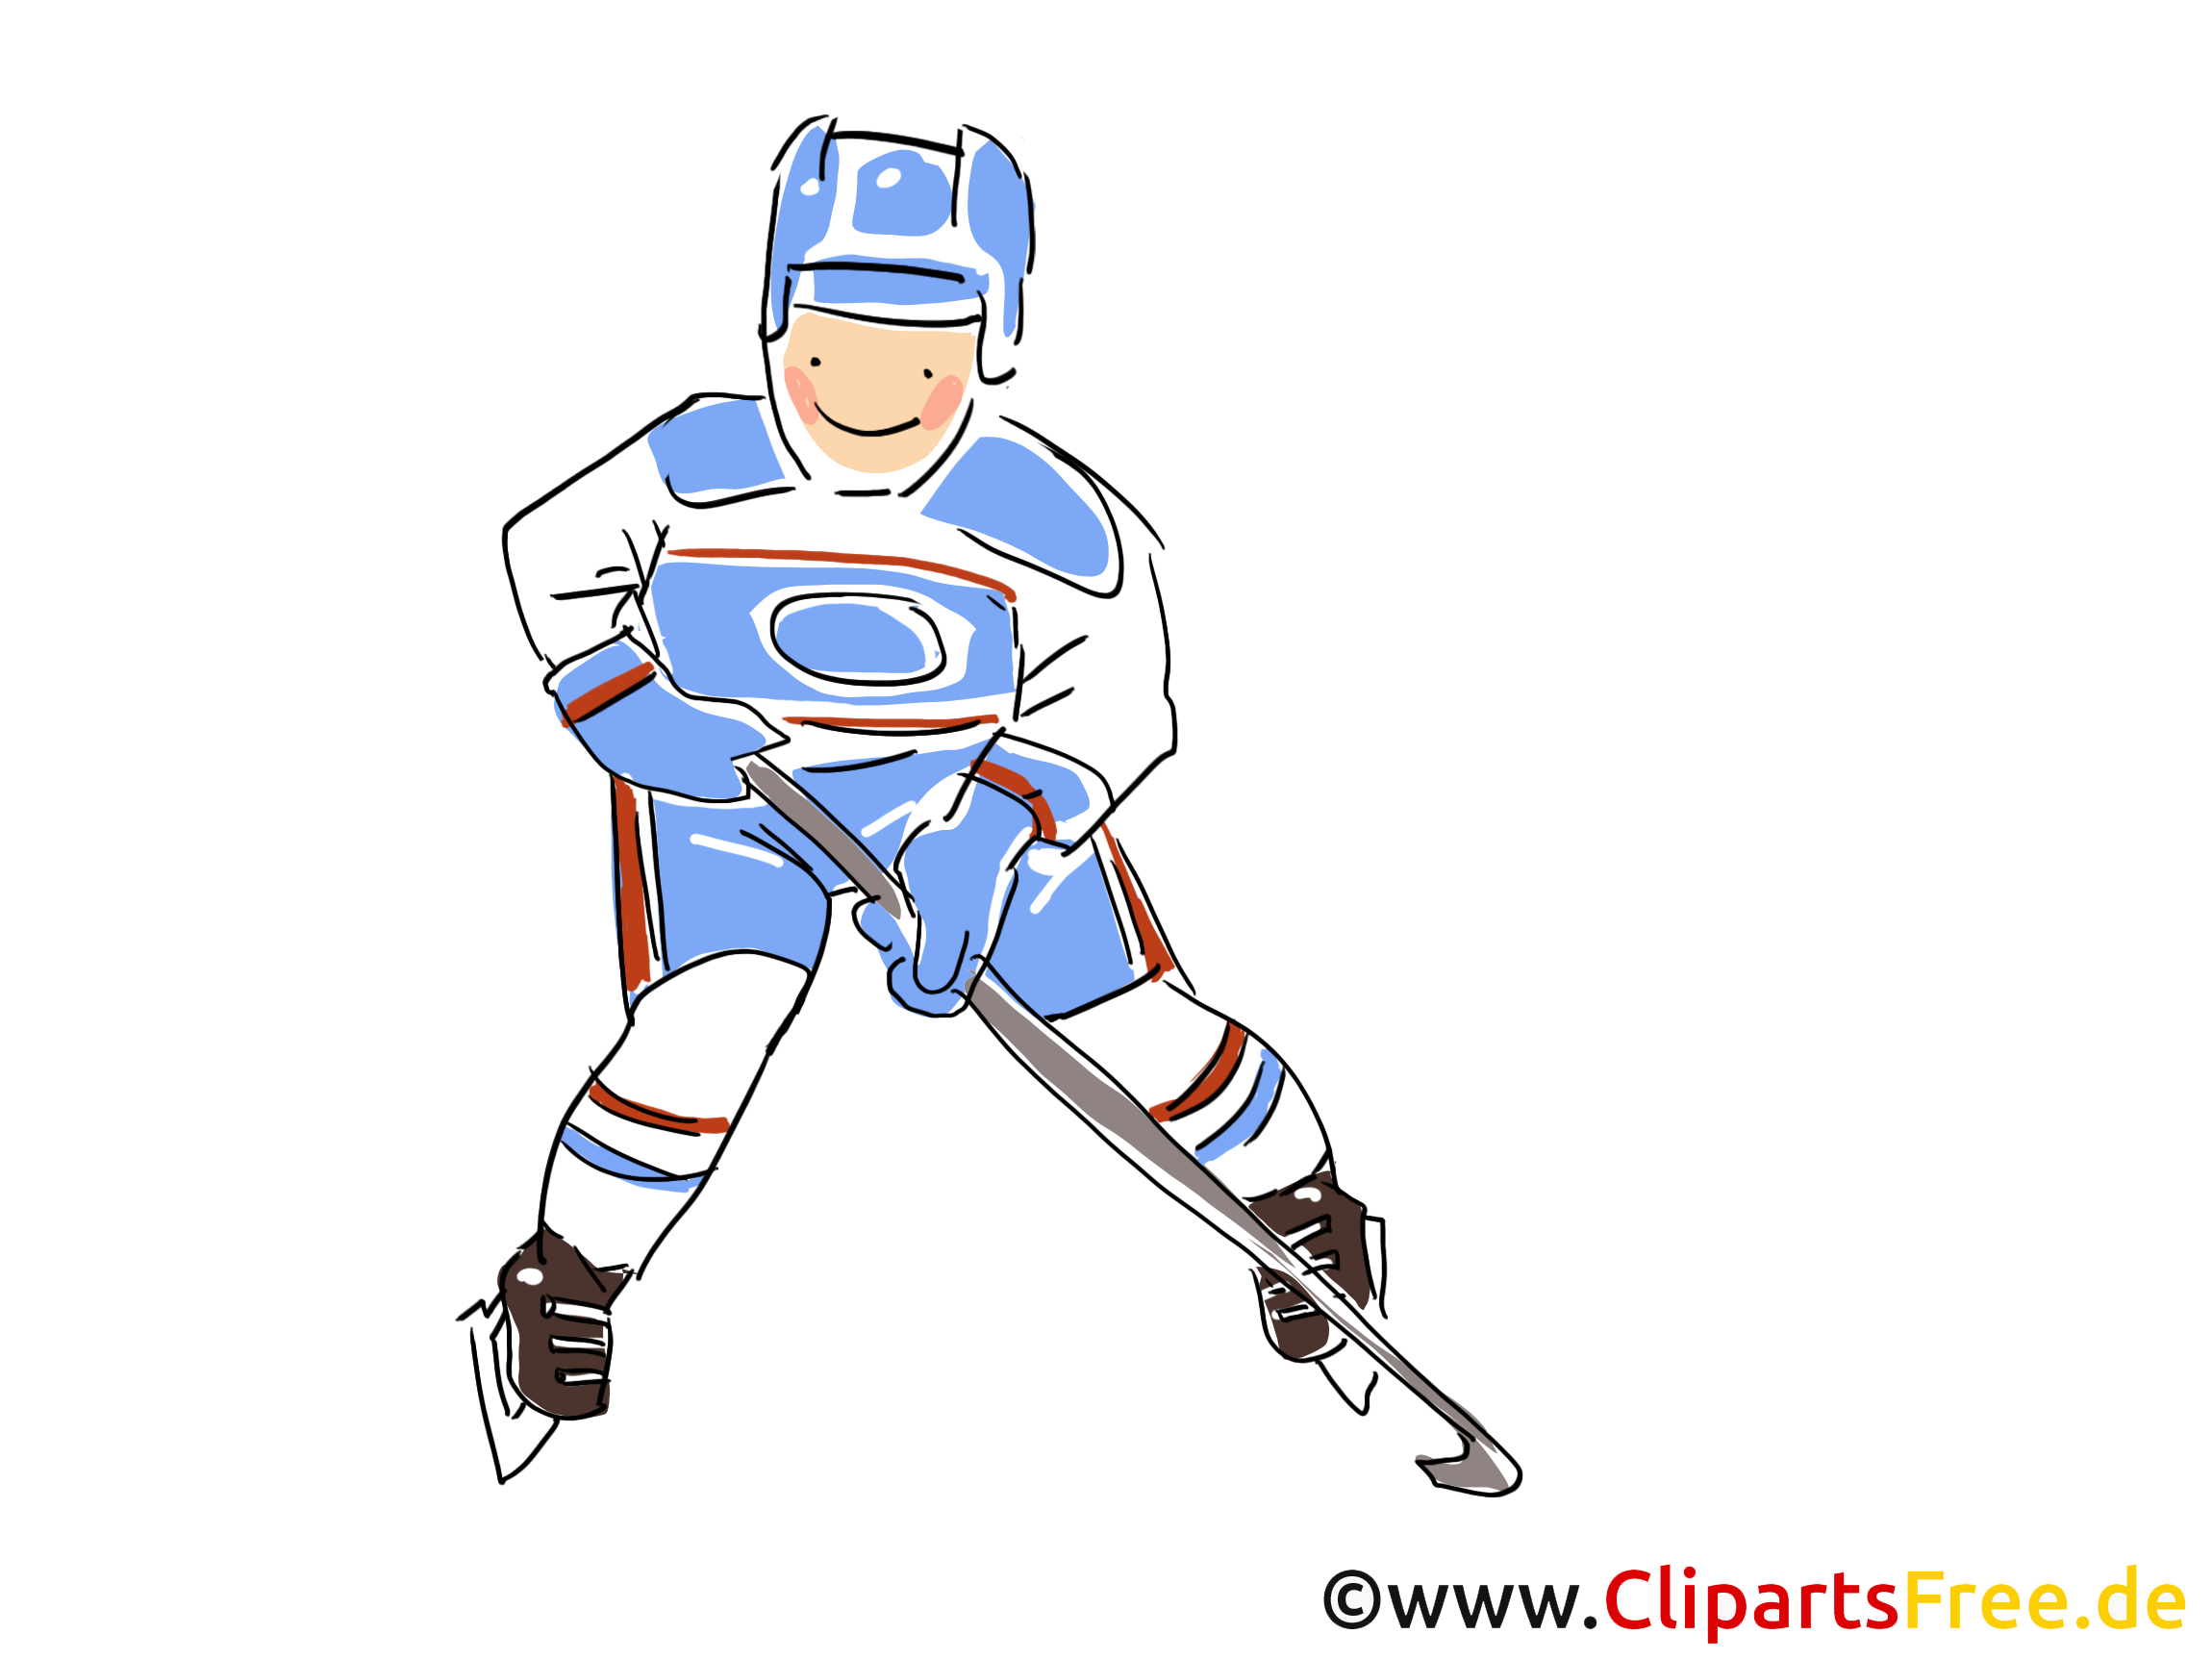 Clipart palet - Hockey dessins gratuits